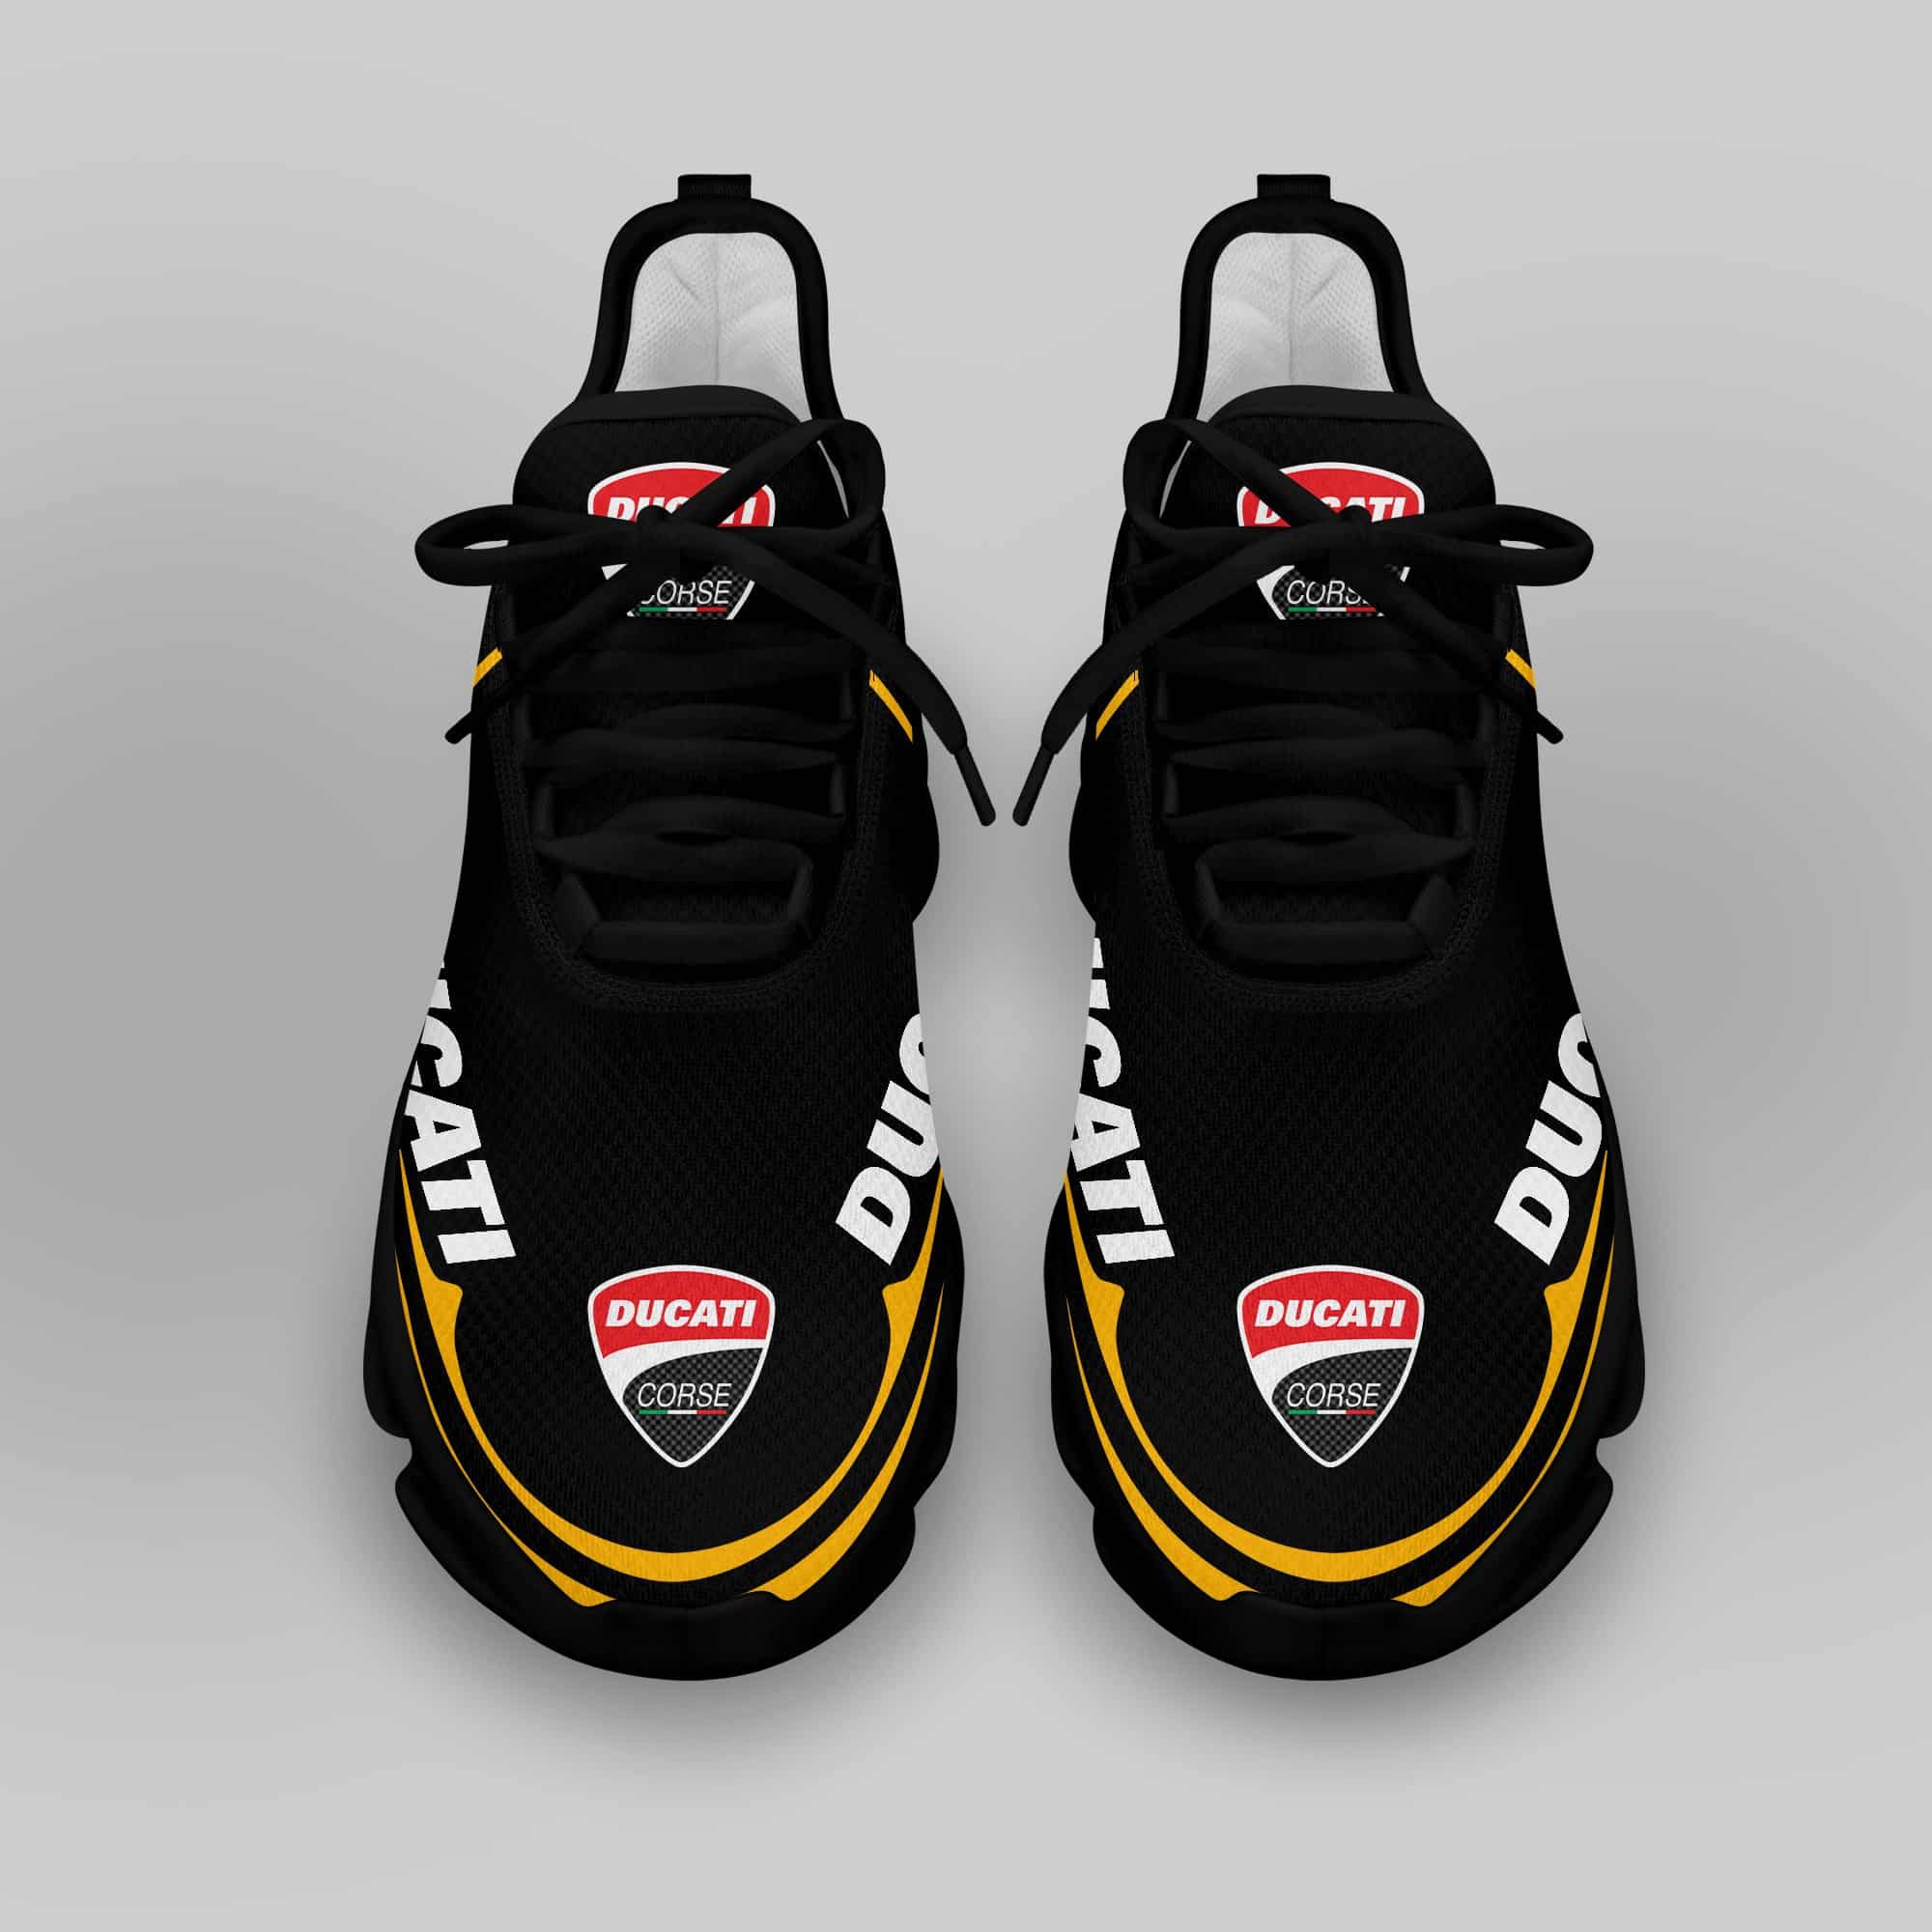 Ducati Racing Running Shoes Max Soul Shoes Sneakers Ver 43 4